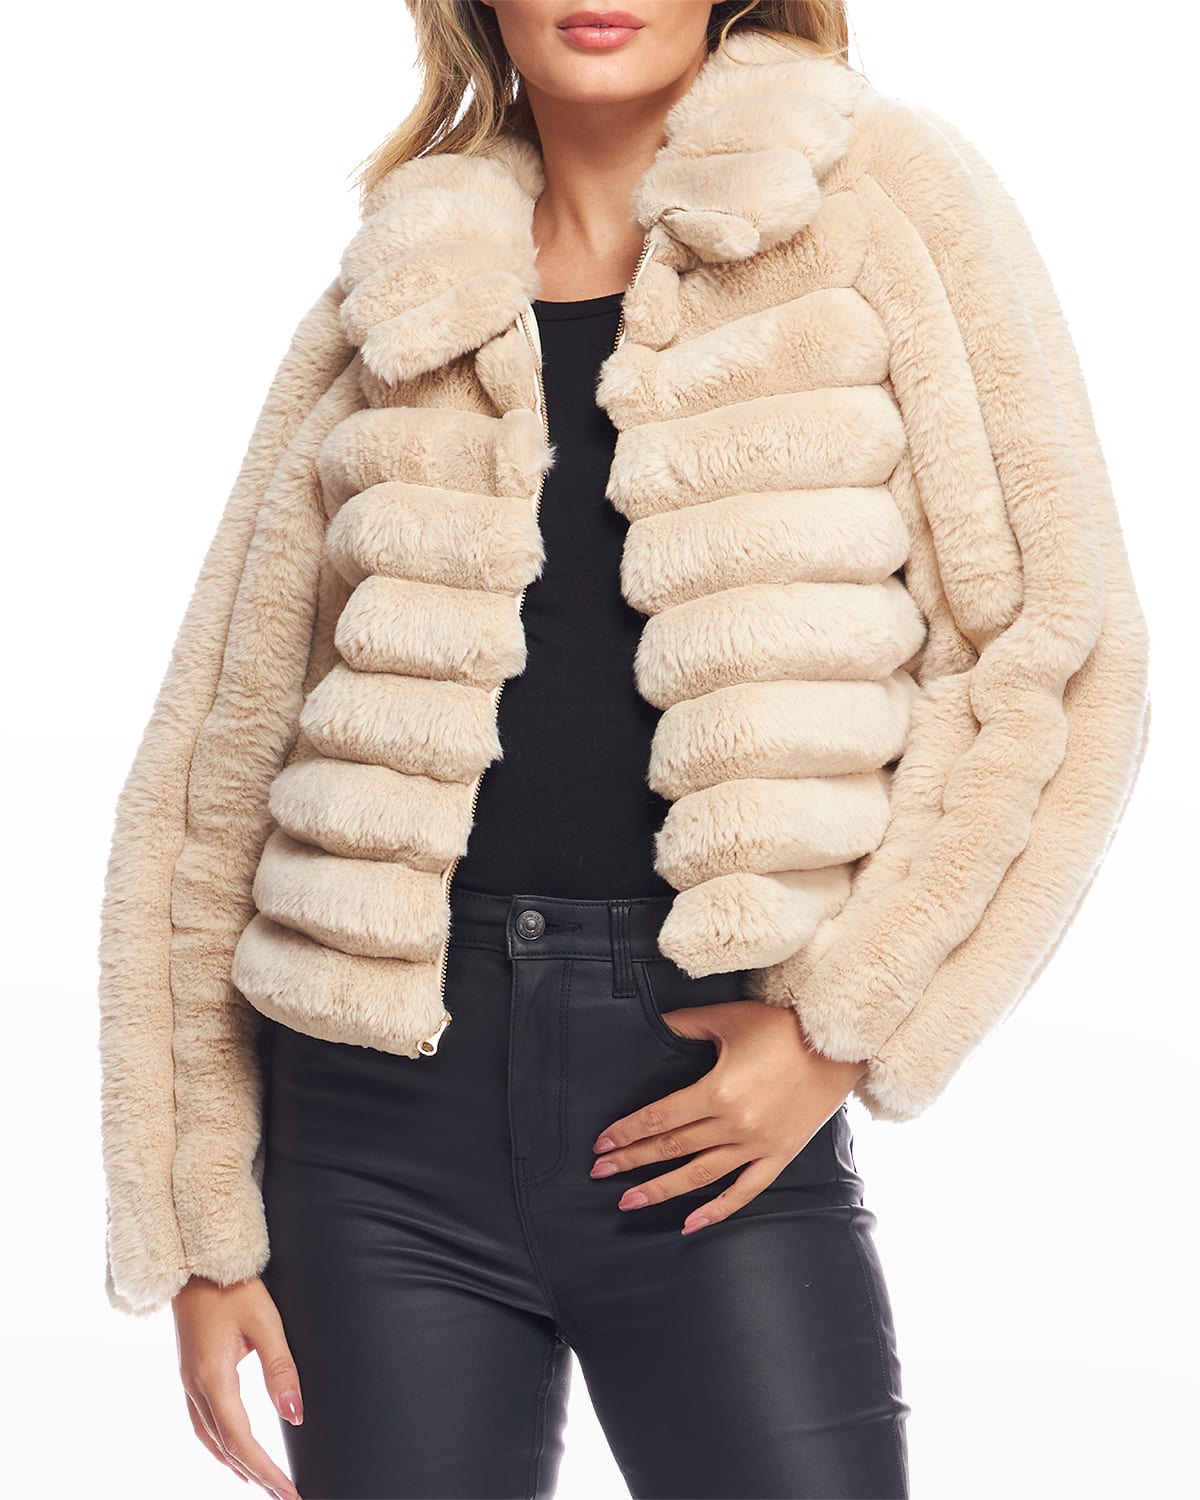 Fabulous Furs Soho Faux Fur Jacket